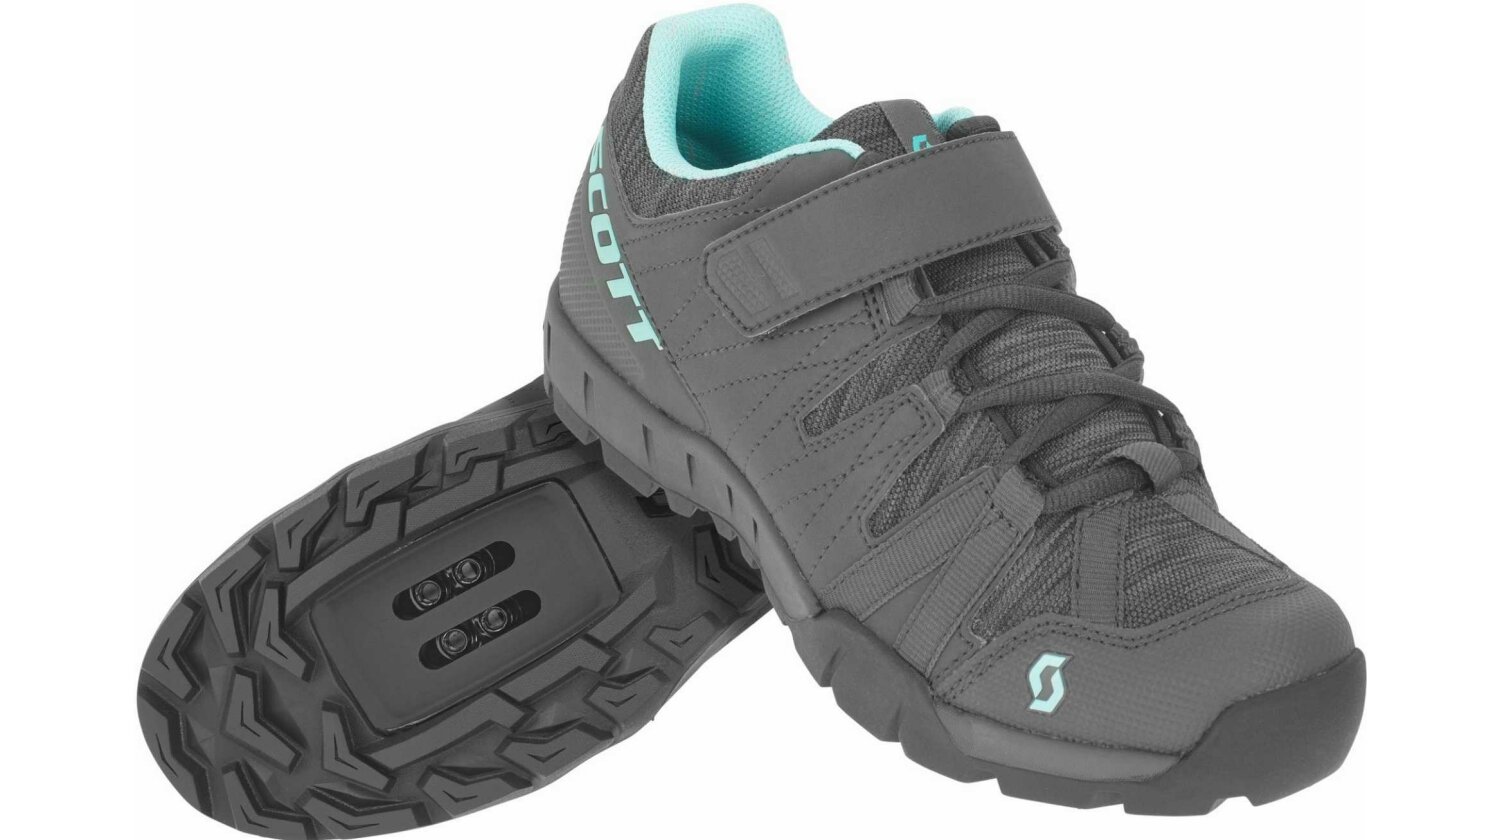 Scott Sport Trail Damen Schuhe dark grey/turquoise blue